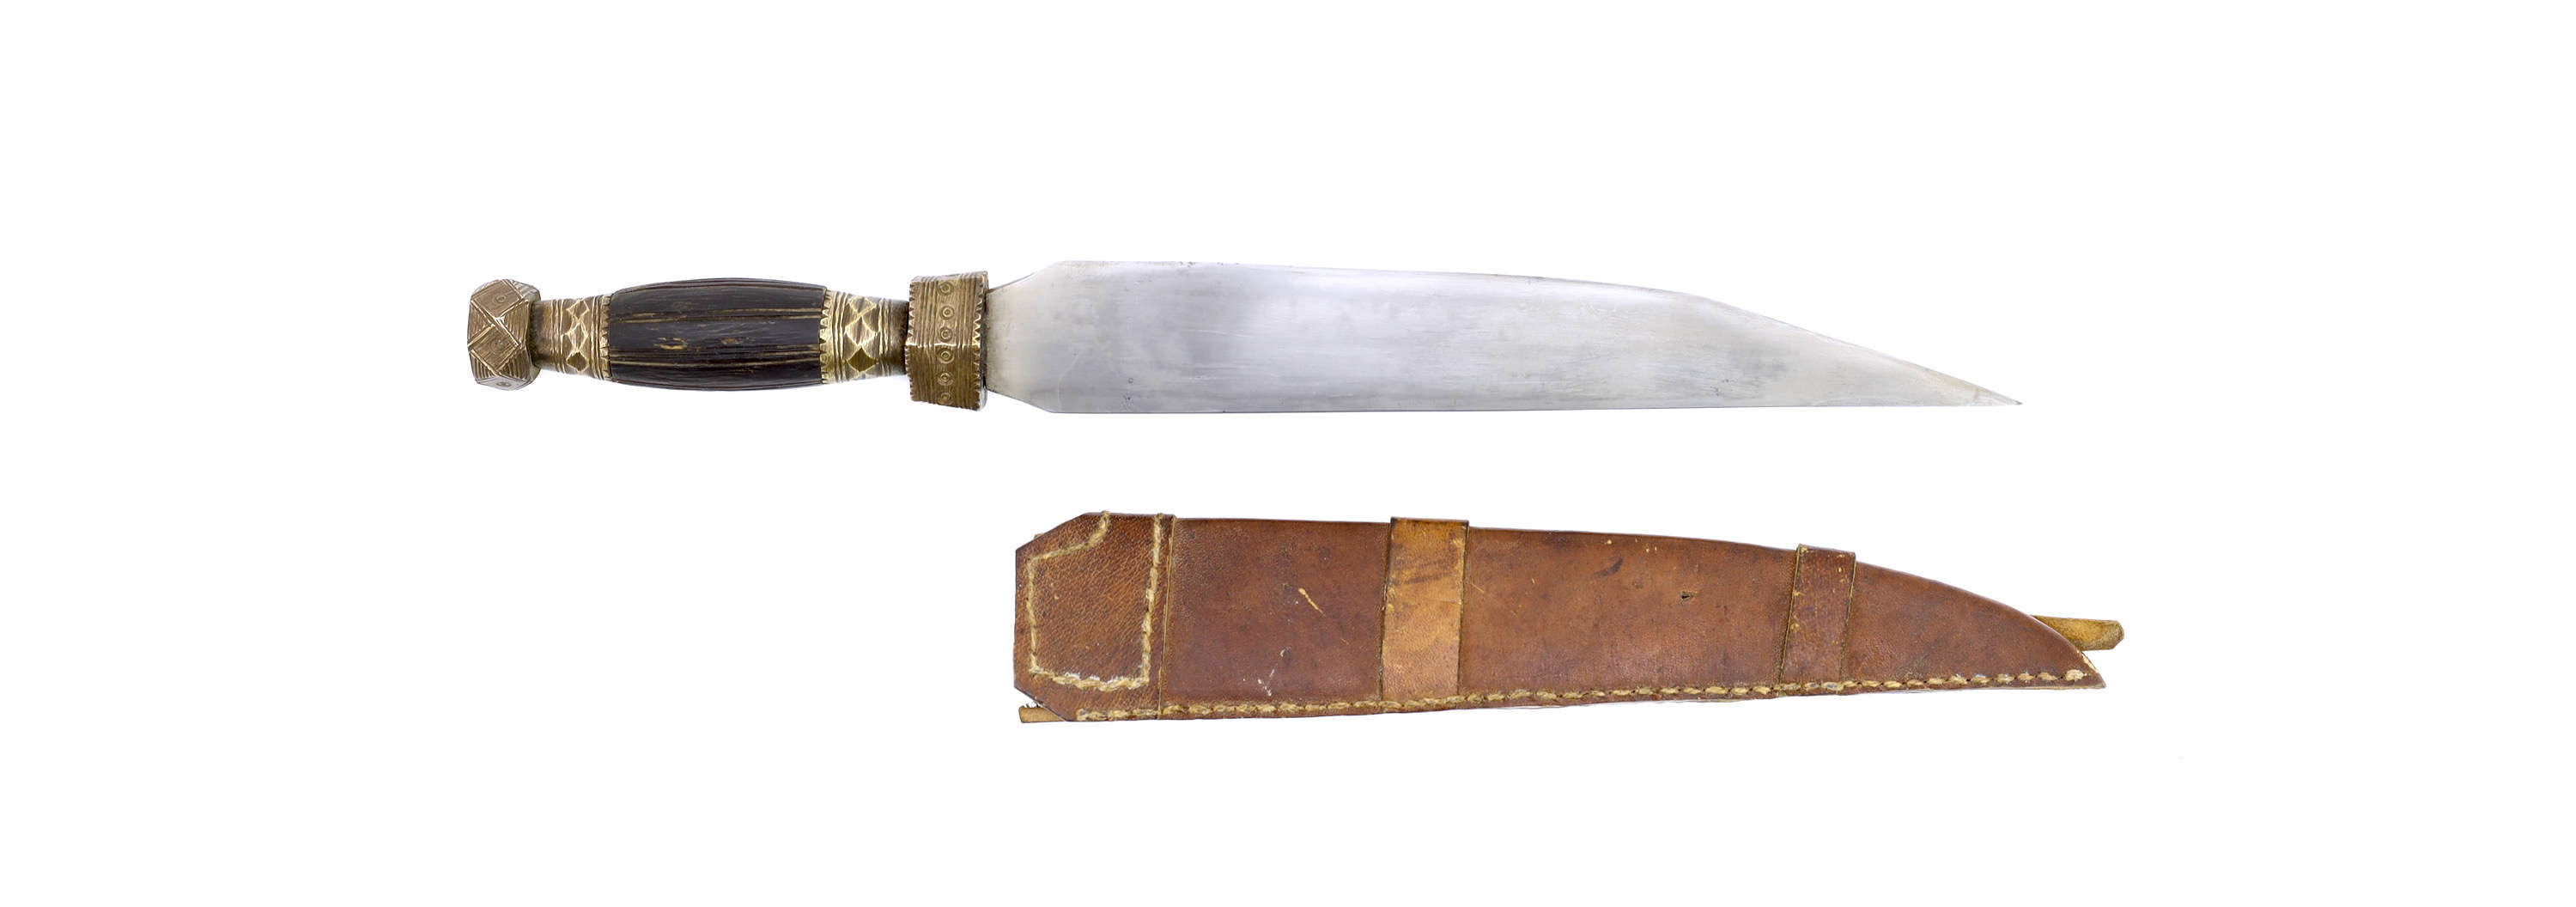 Heavy Sino-Vietnamese dagger